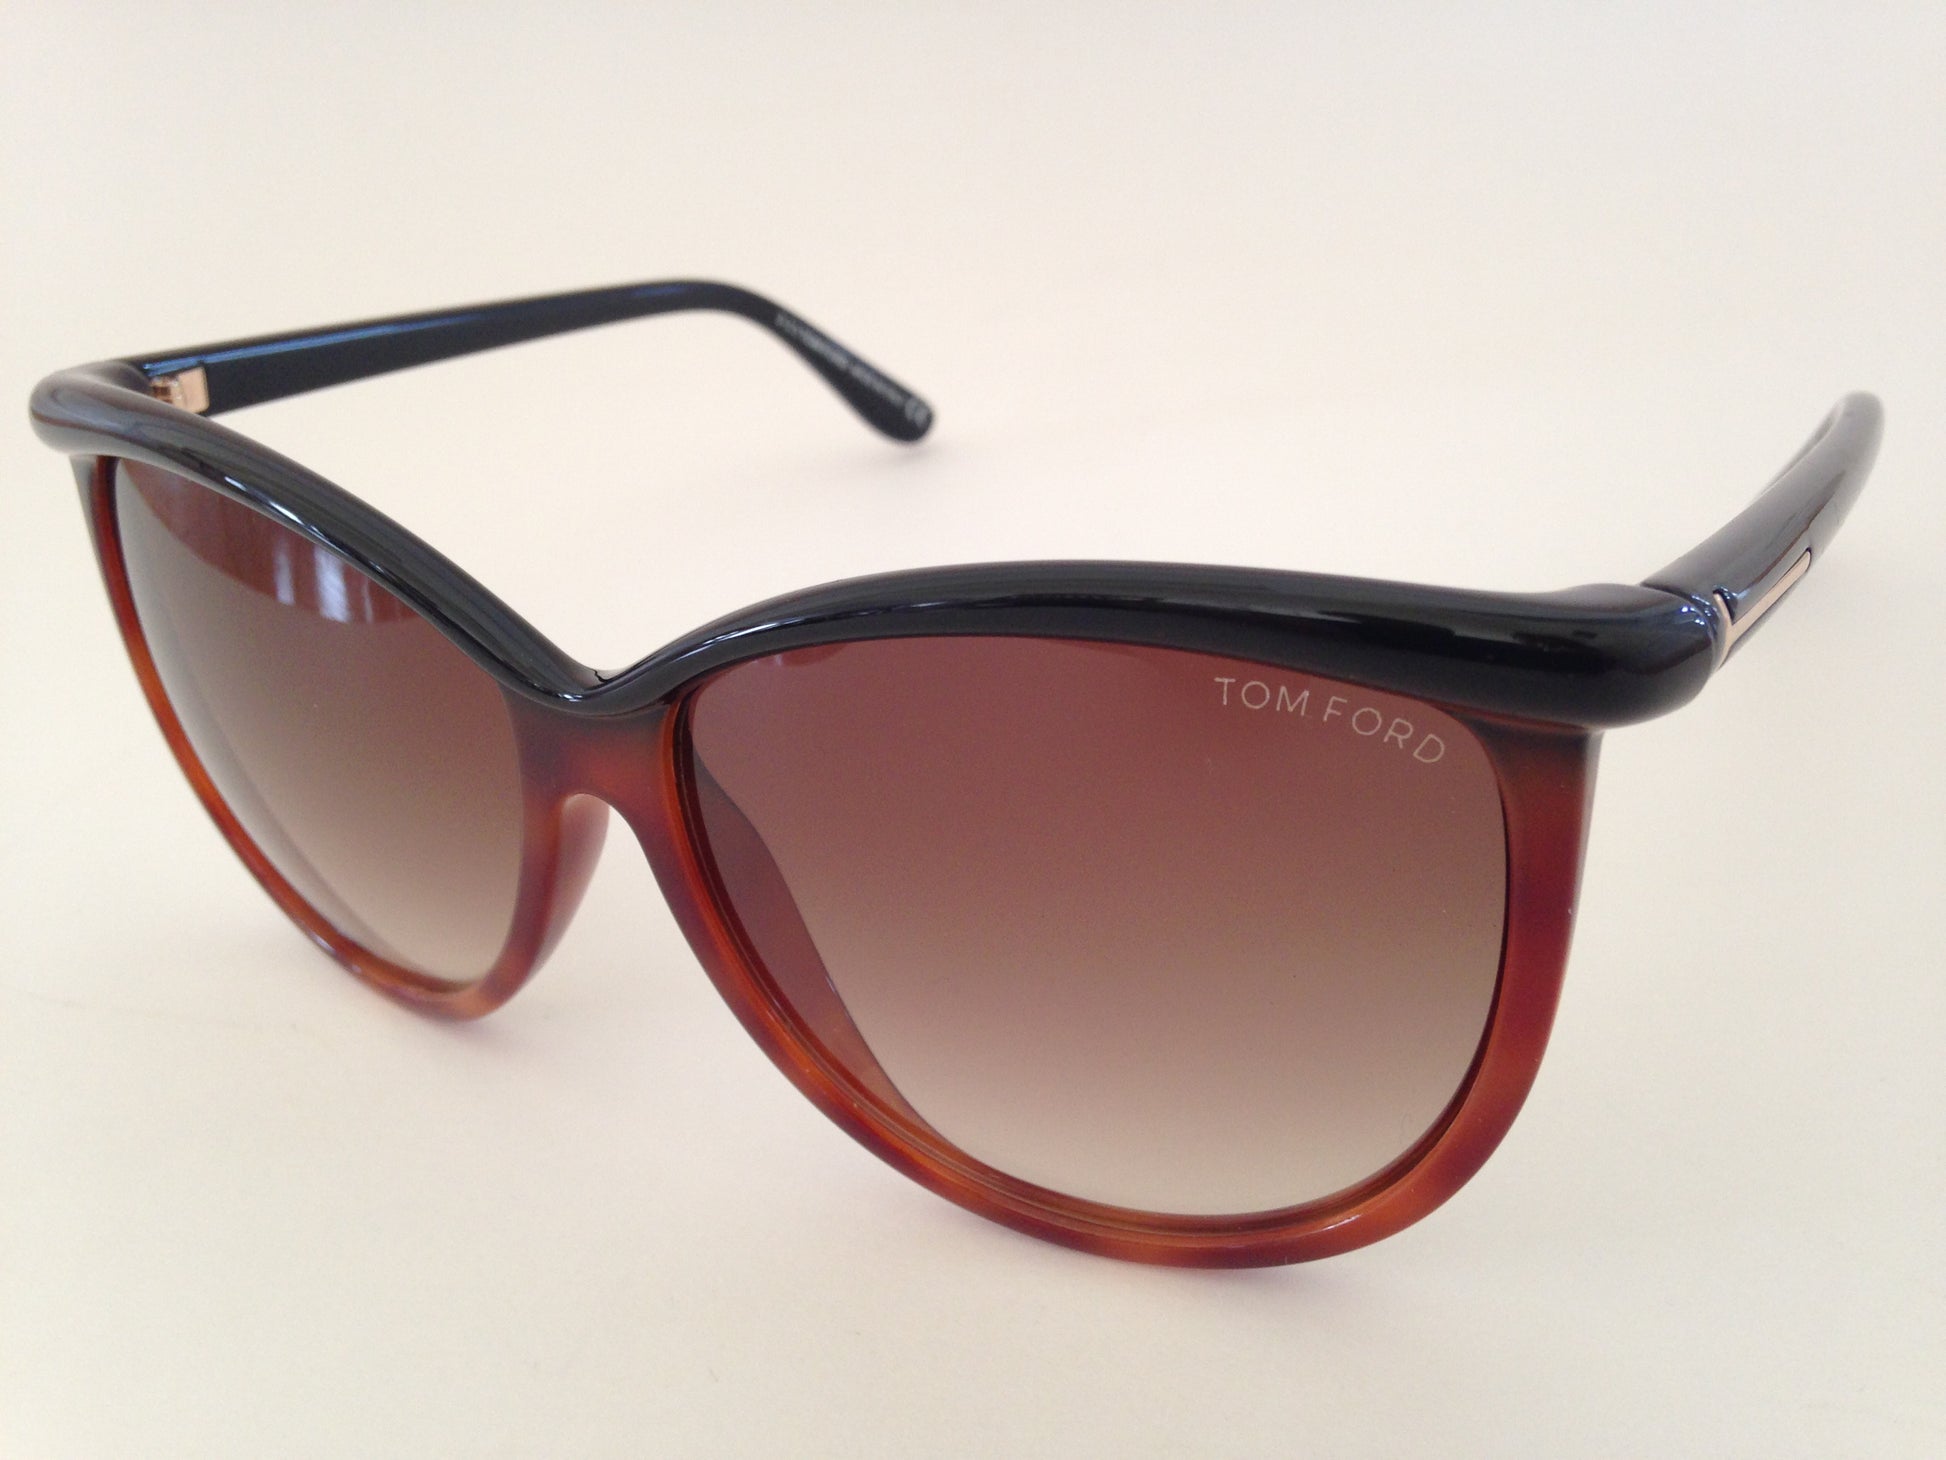 Tom Ford Josephine Sunglasses Oversize Soft Round Black Brown Frame Brown Tea Gradient Lens Tf296 05F - Sunglasses